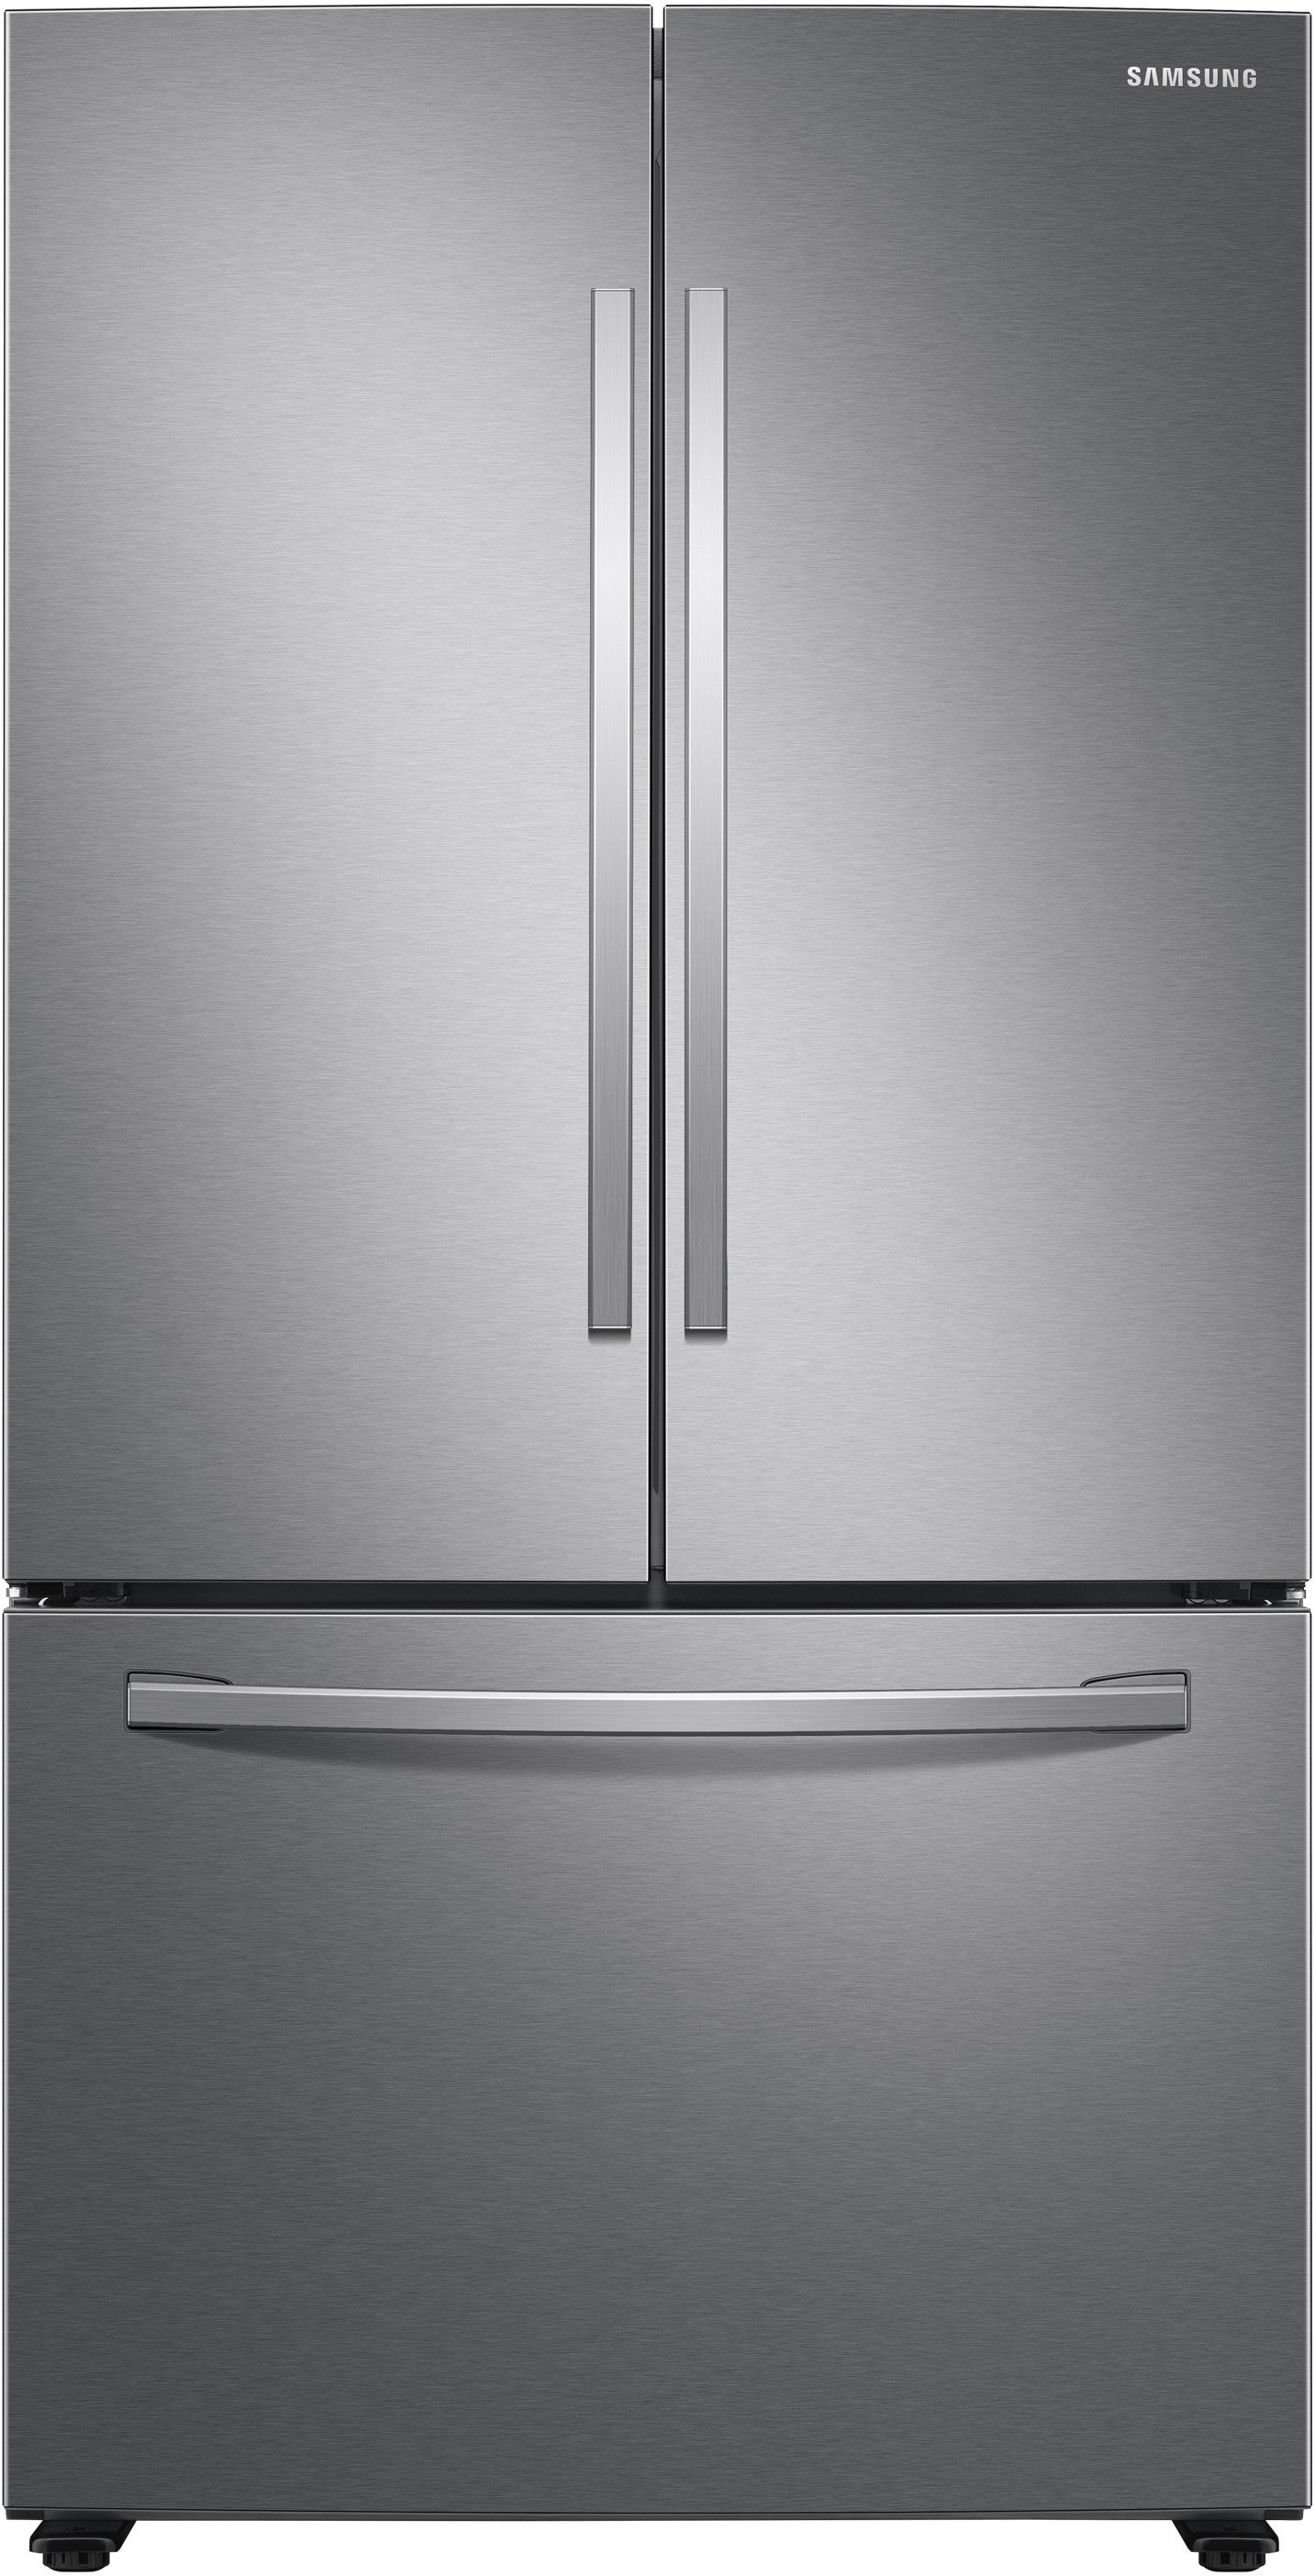 Samsung RF28T5001SR/AA 28 Cu. Ft. Large Capacity 3-Door Refrigerator - Samsung Parts USA